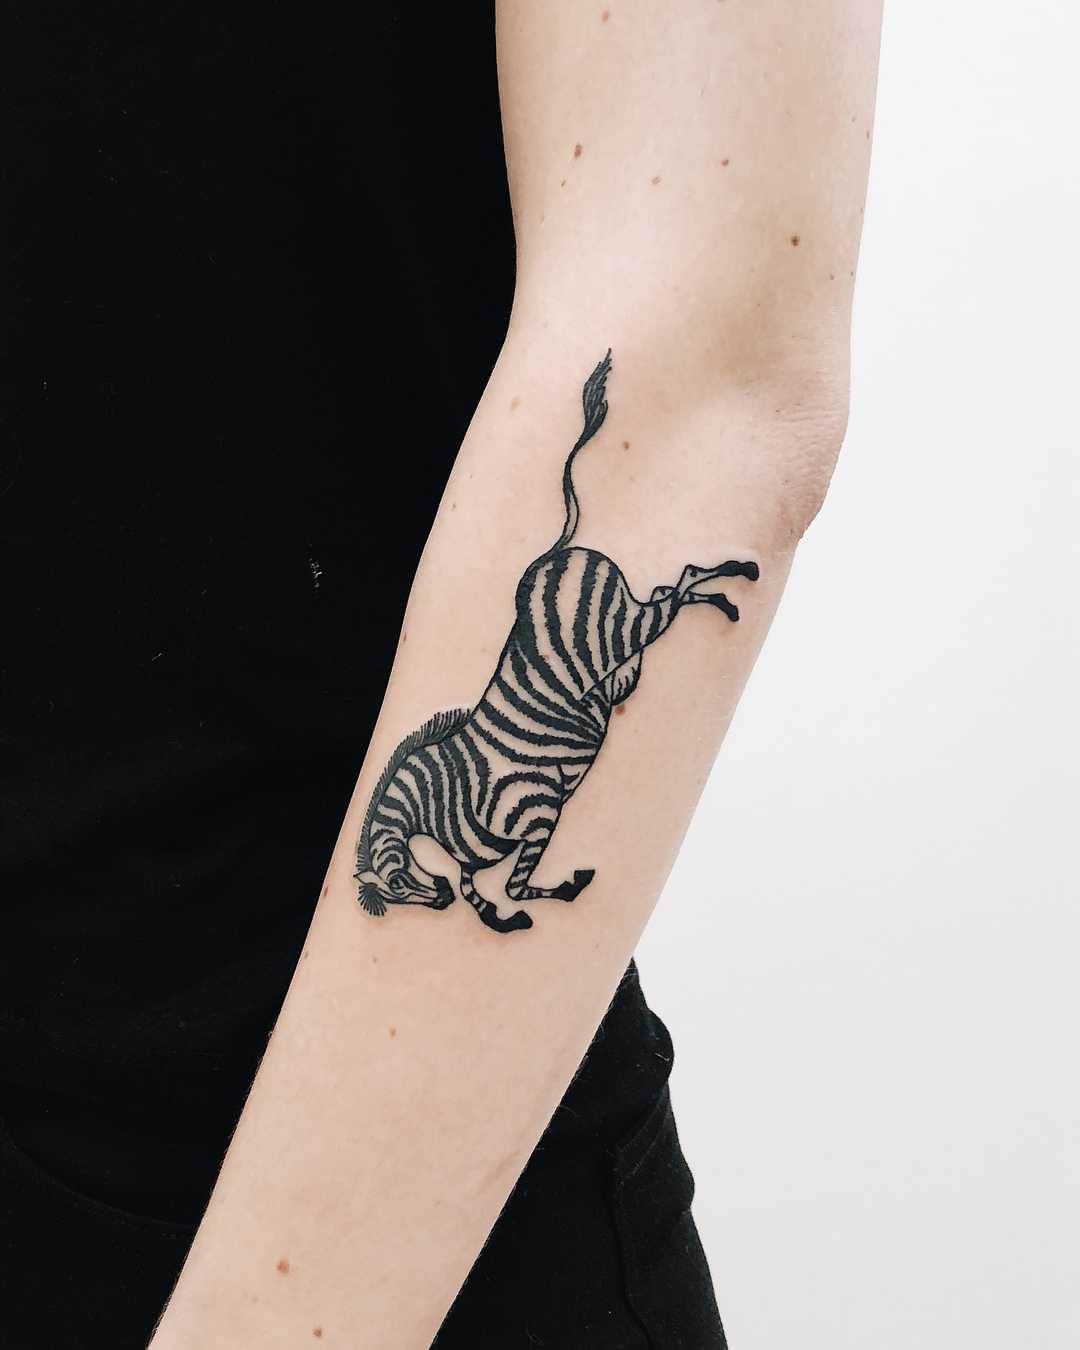 Cool zebra tattoo on the forearm - Tattoogrid.net